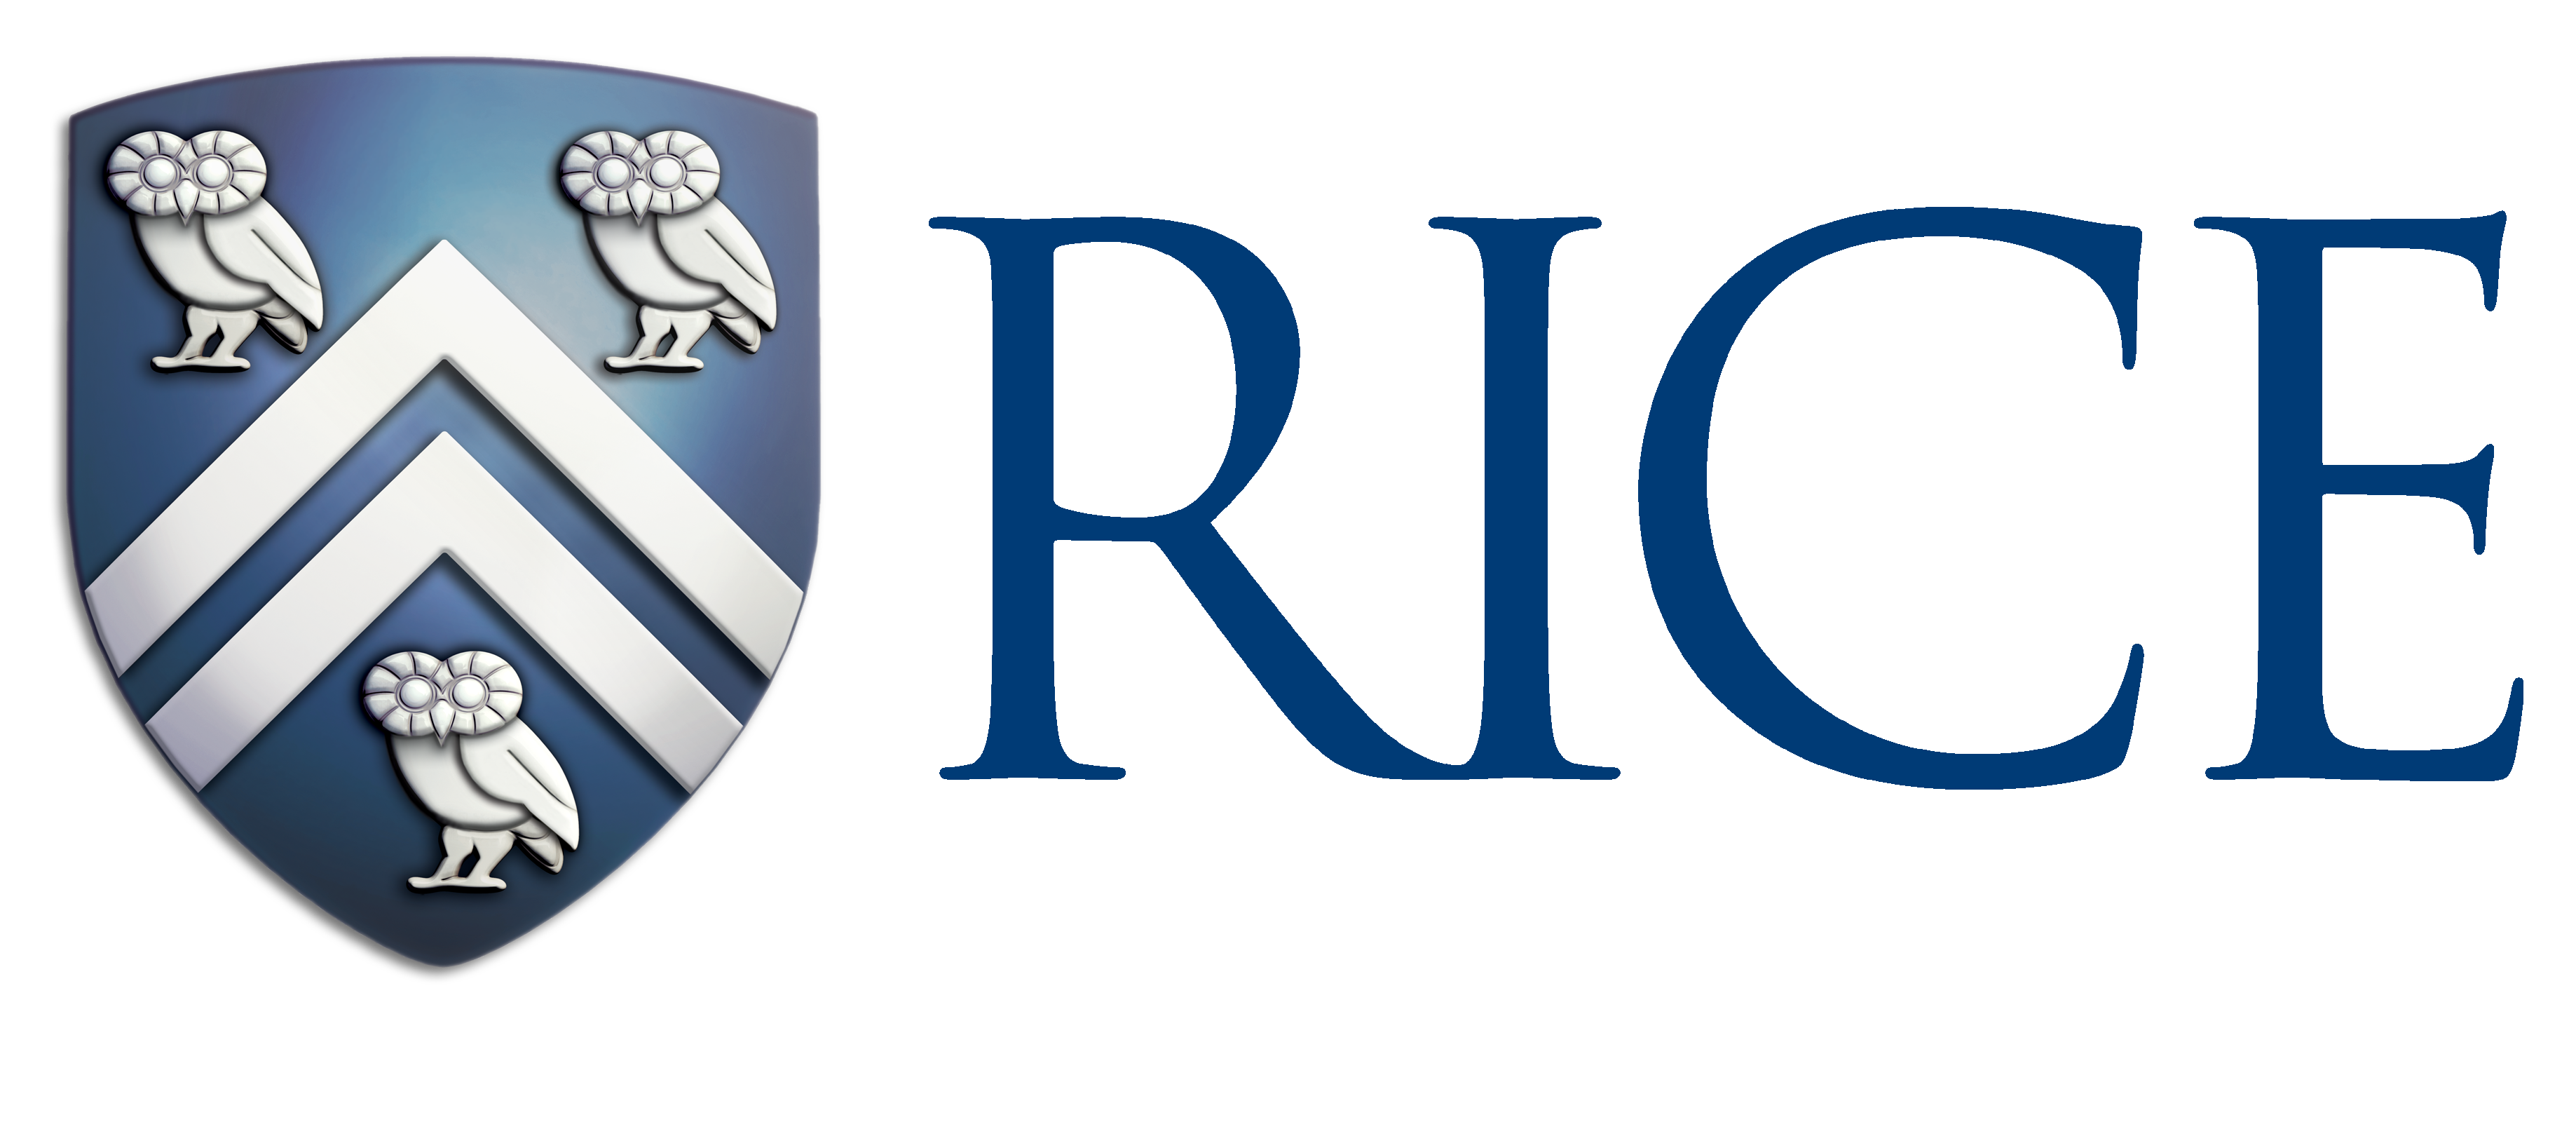 rice clipart logo